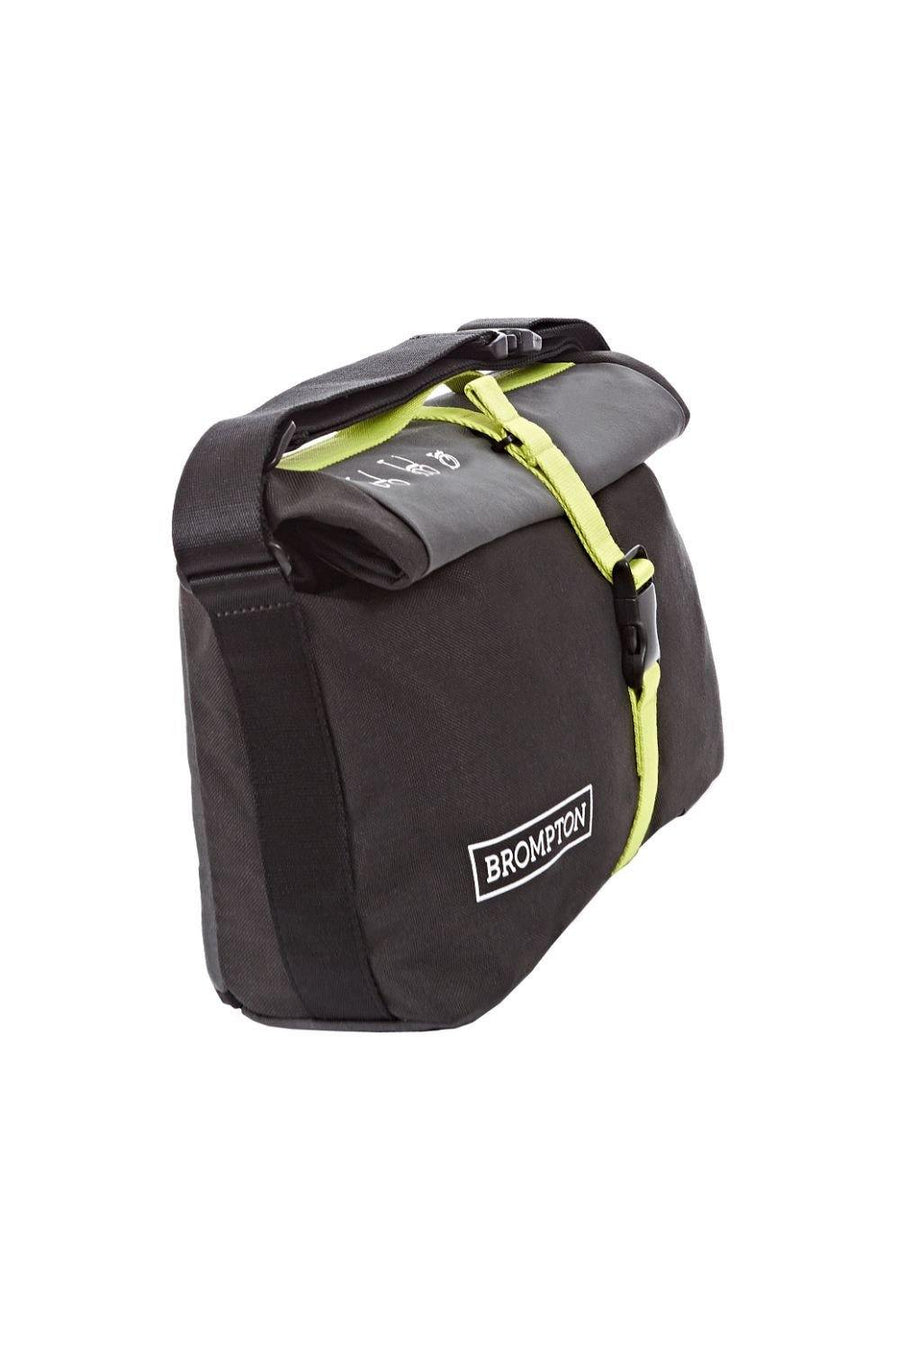 Brompton Roll Top Shoulder Bag - Grey/Black/Lime Green - SpinWarriors